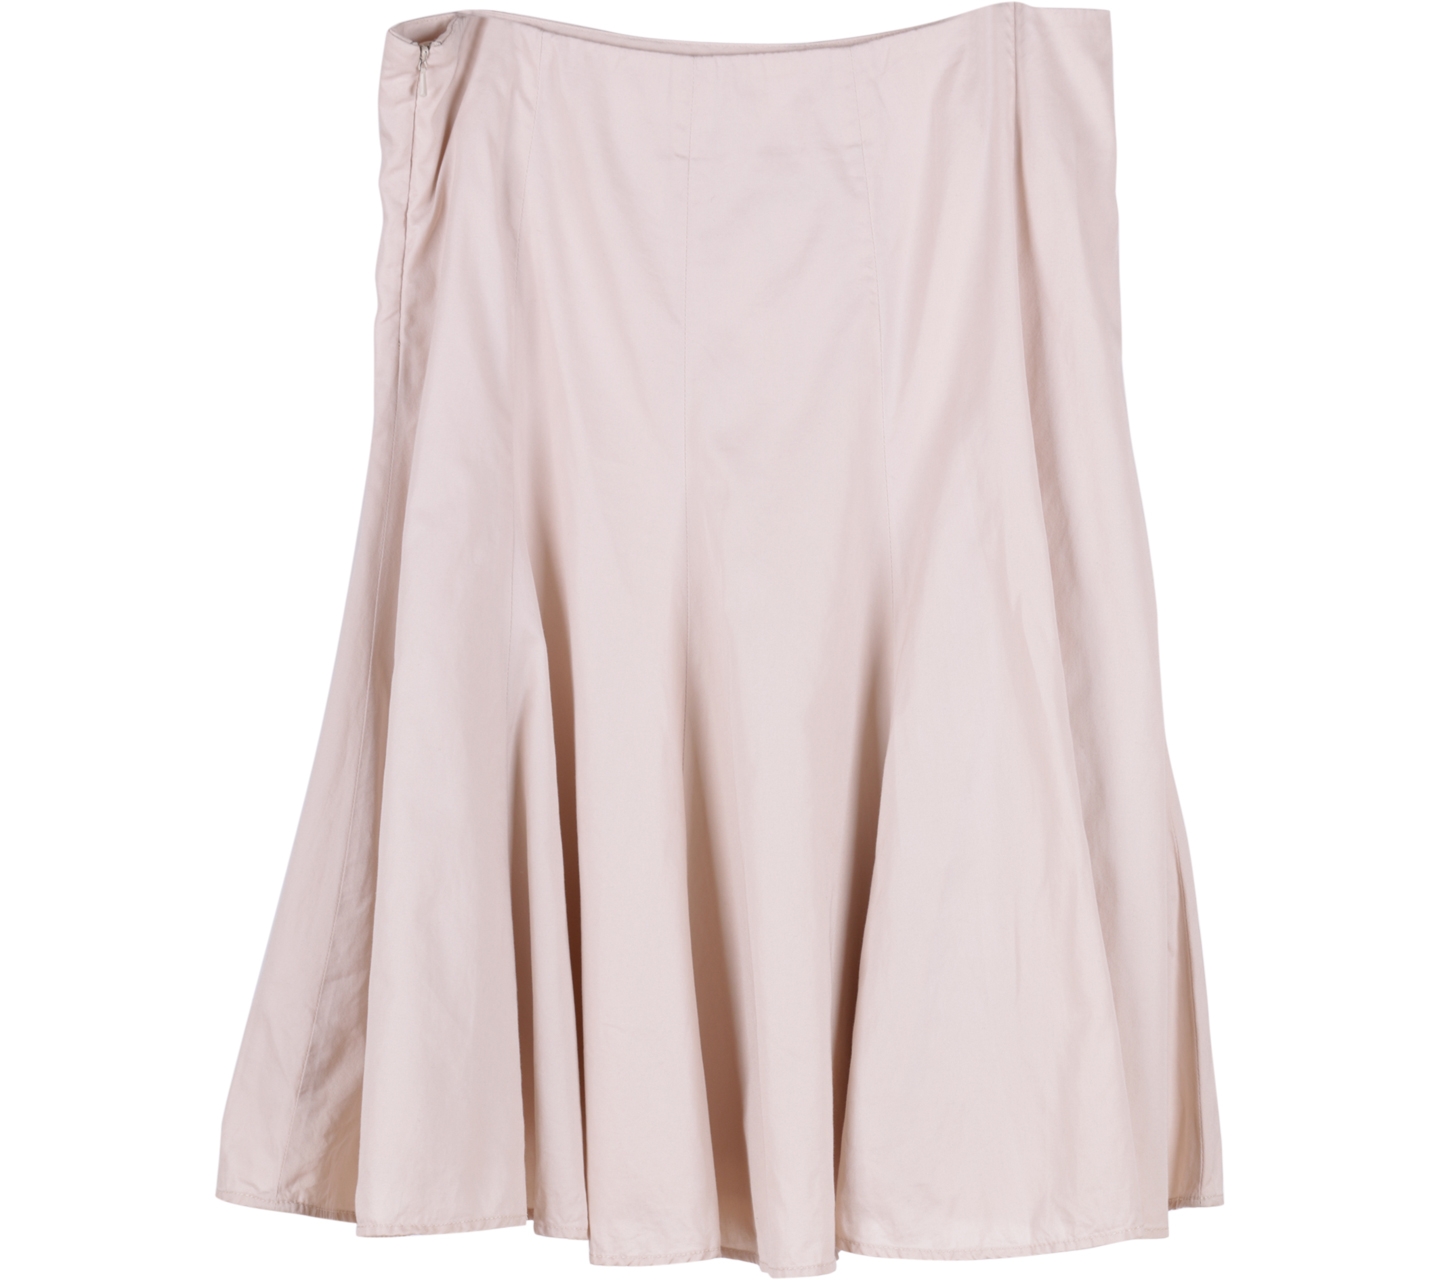 GAP Cream Flare Skirt